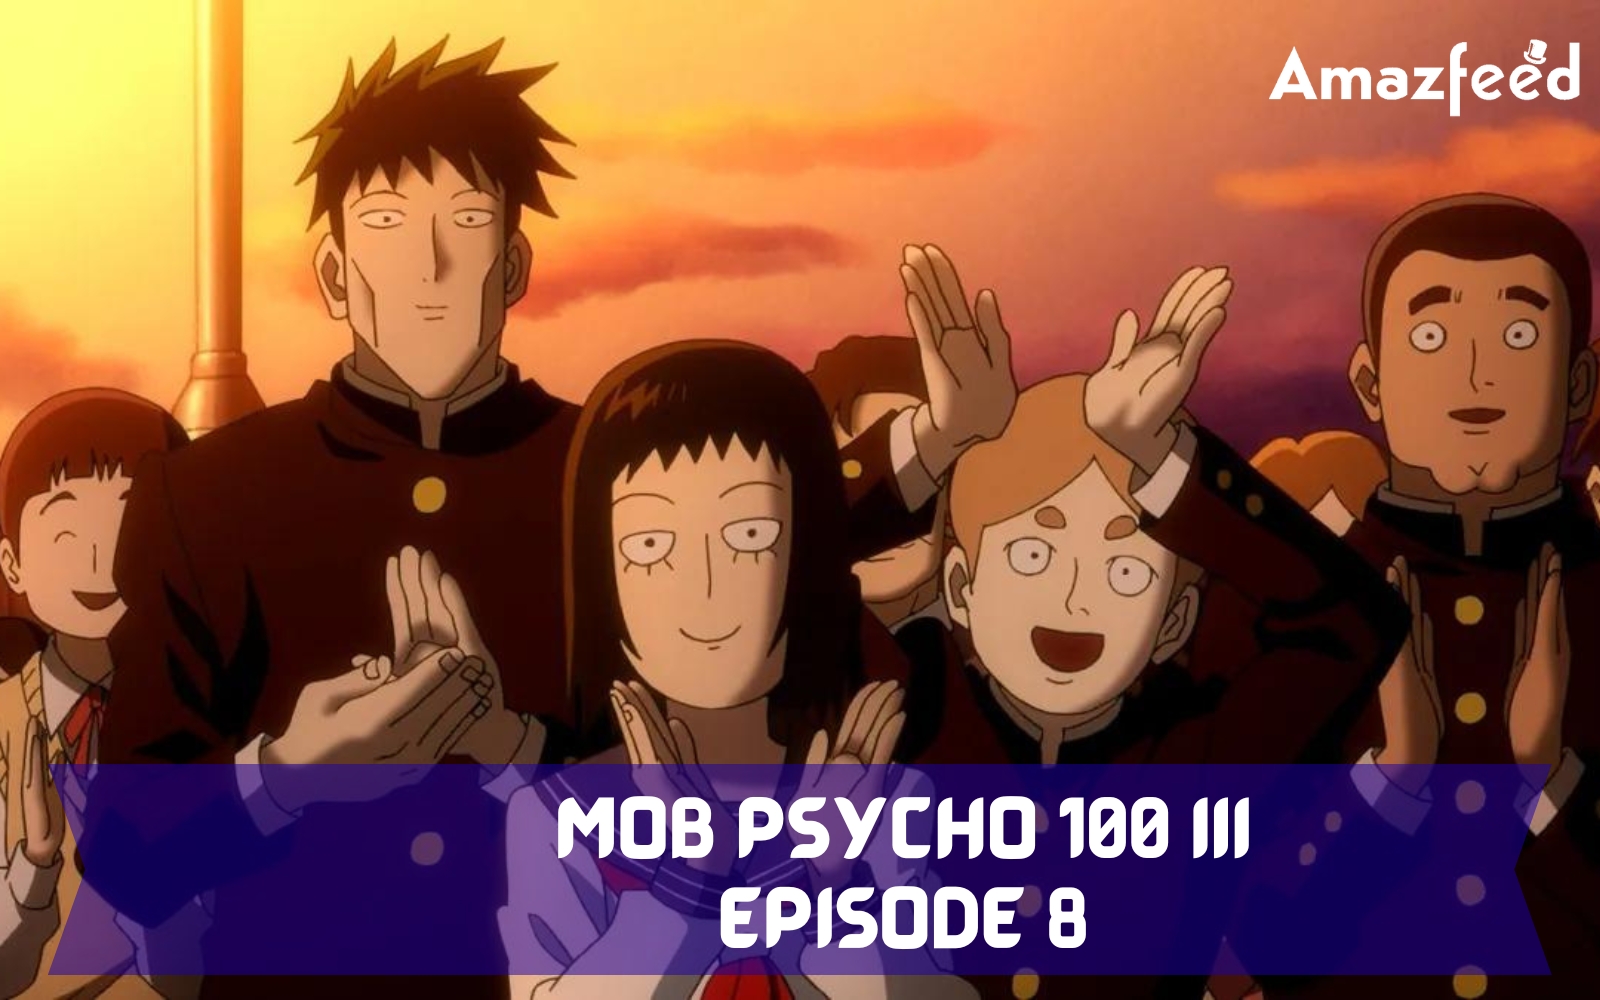 Mob Psycho 100 season 3, episode 4 recap - “Divine Tree 1 ~The